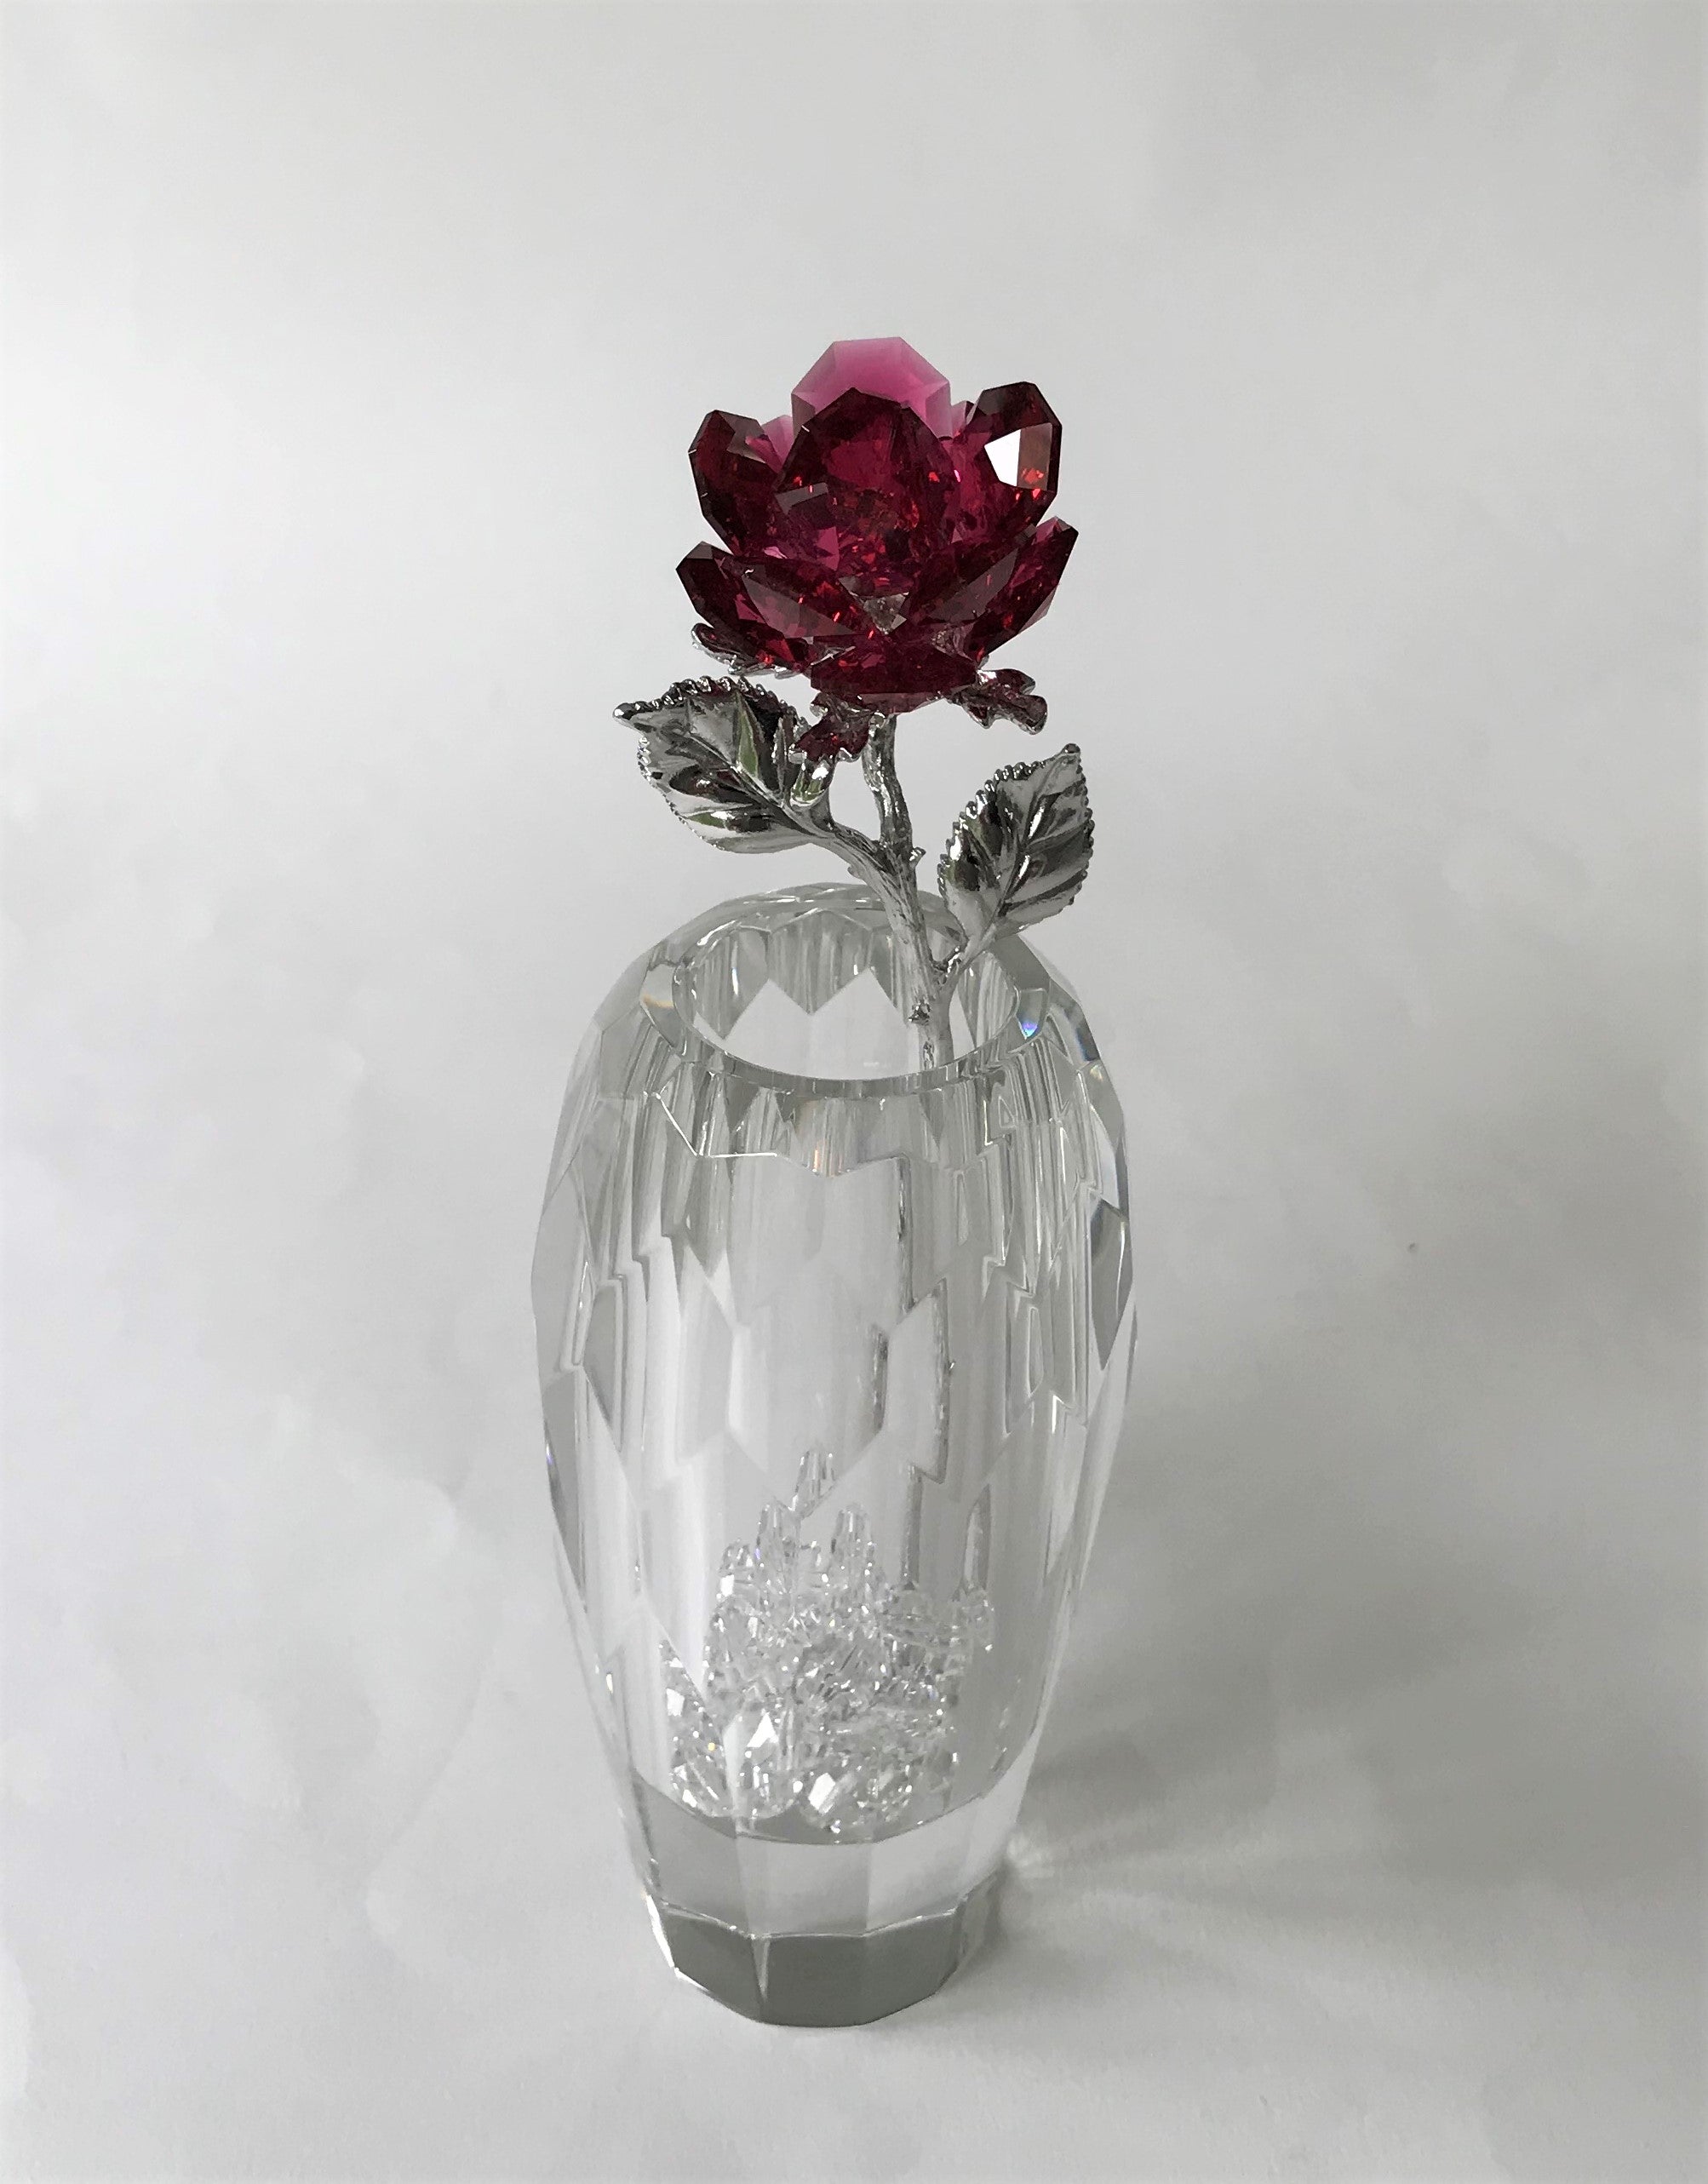 Red Crystal Rose Handcrafted By Bjcrystalgifts Using Swarovski